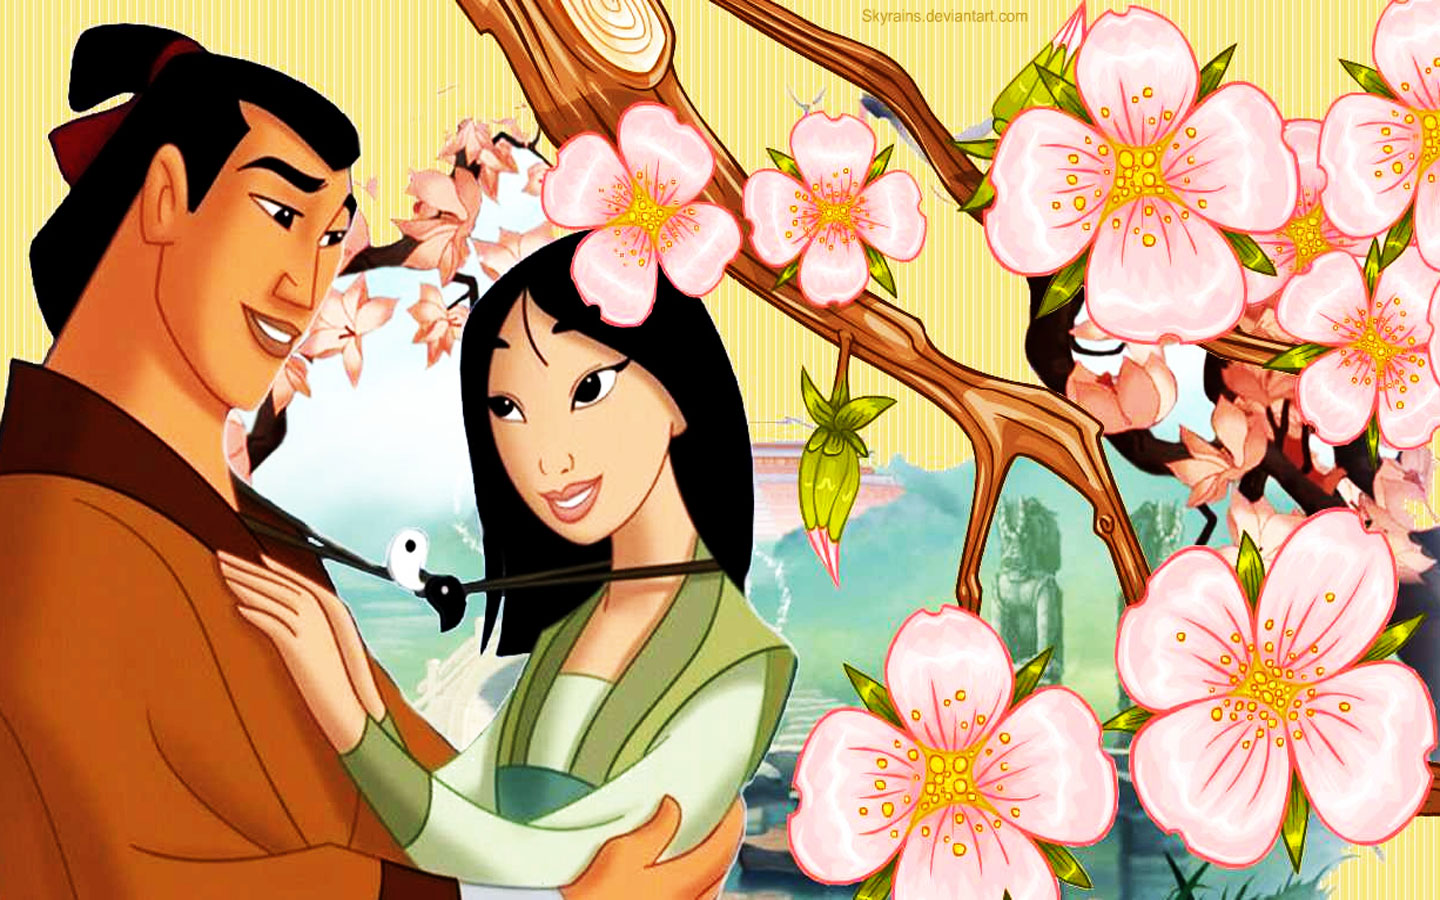 Mulan Shang HD Wallpaper Image For Desktop Cartoons